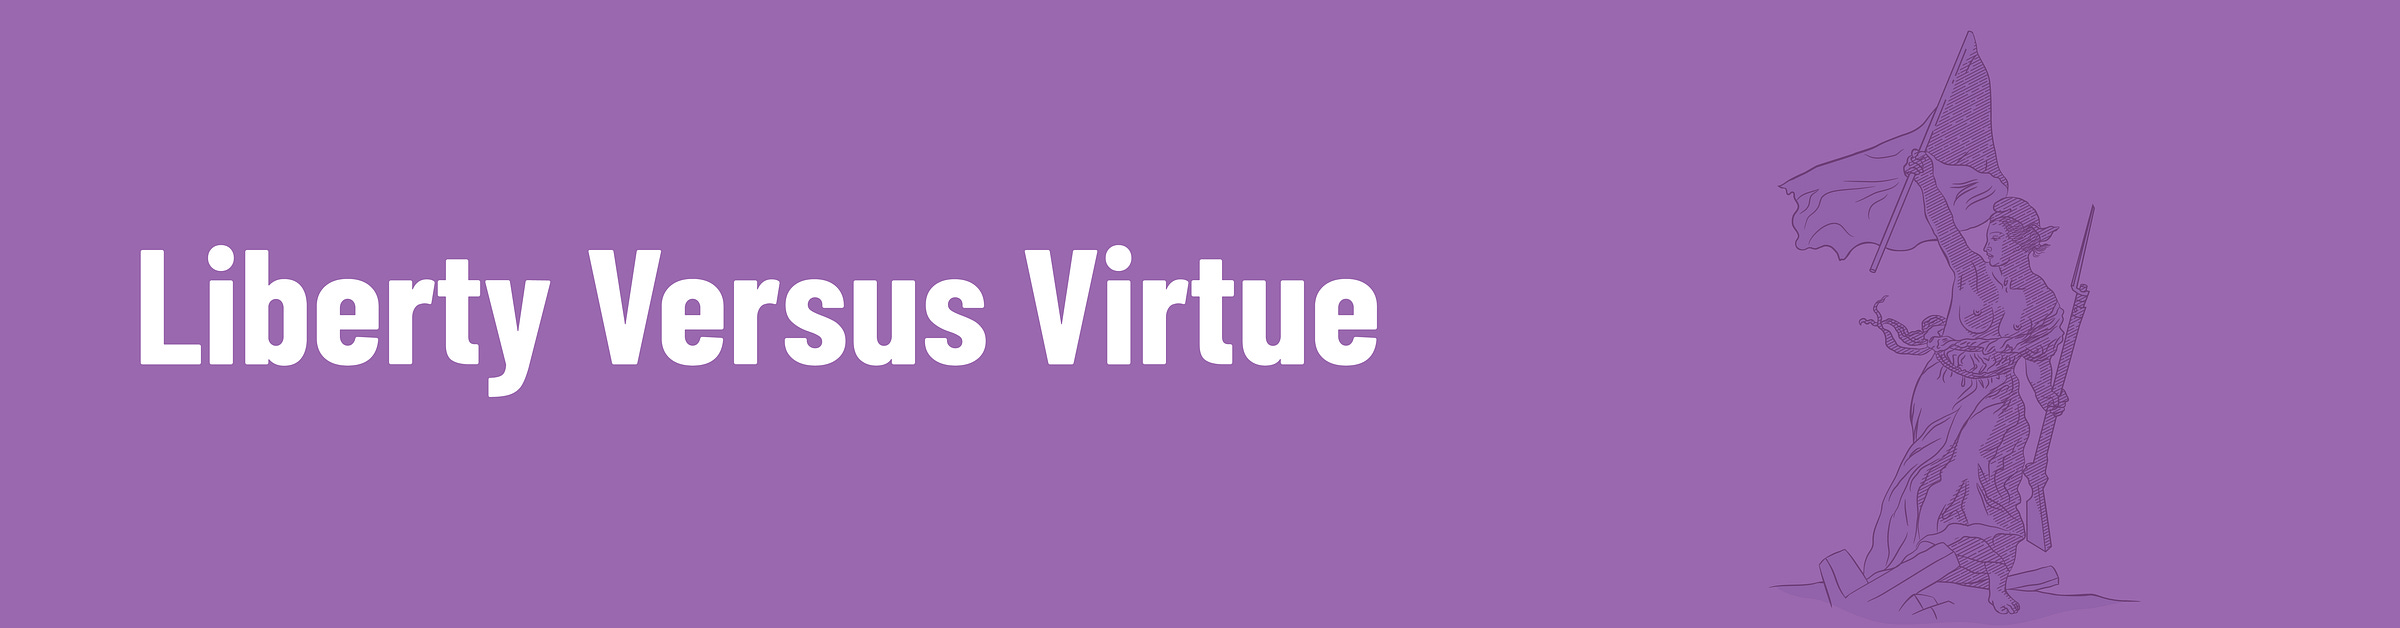 Liberty Versus Virtue